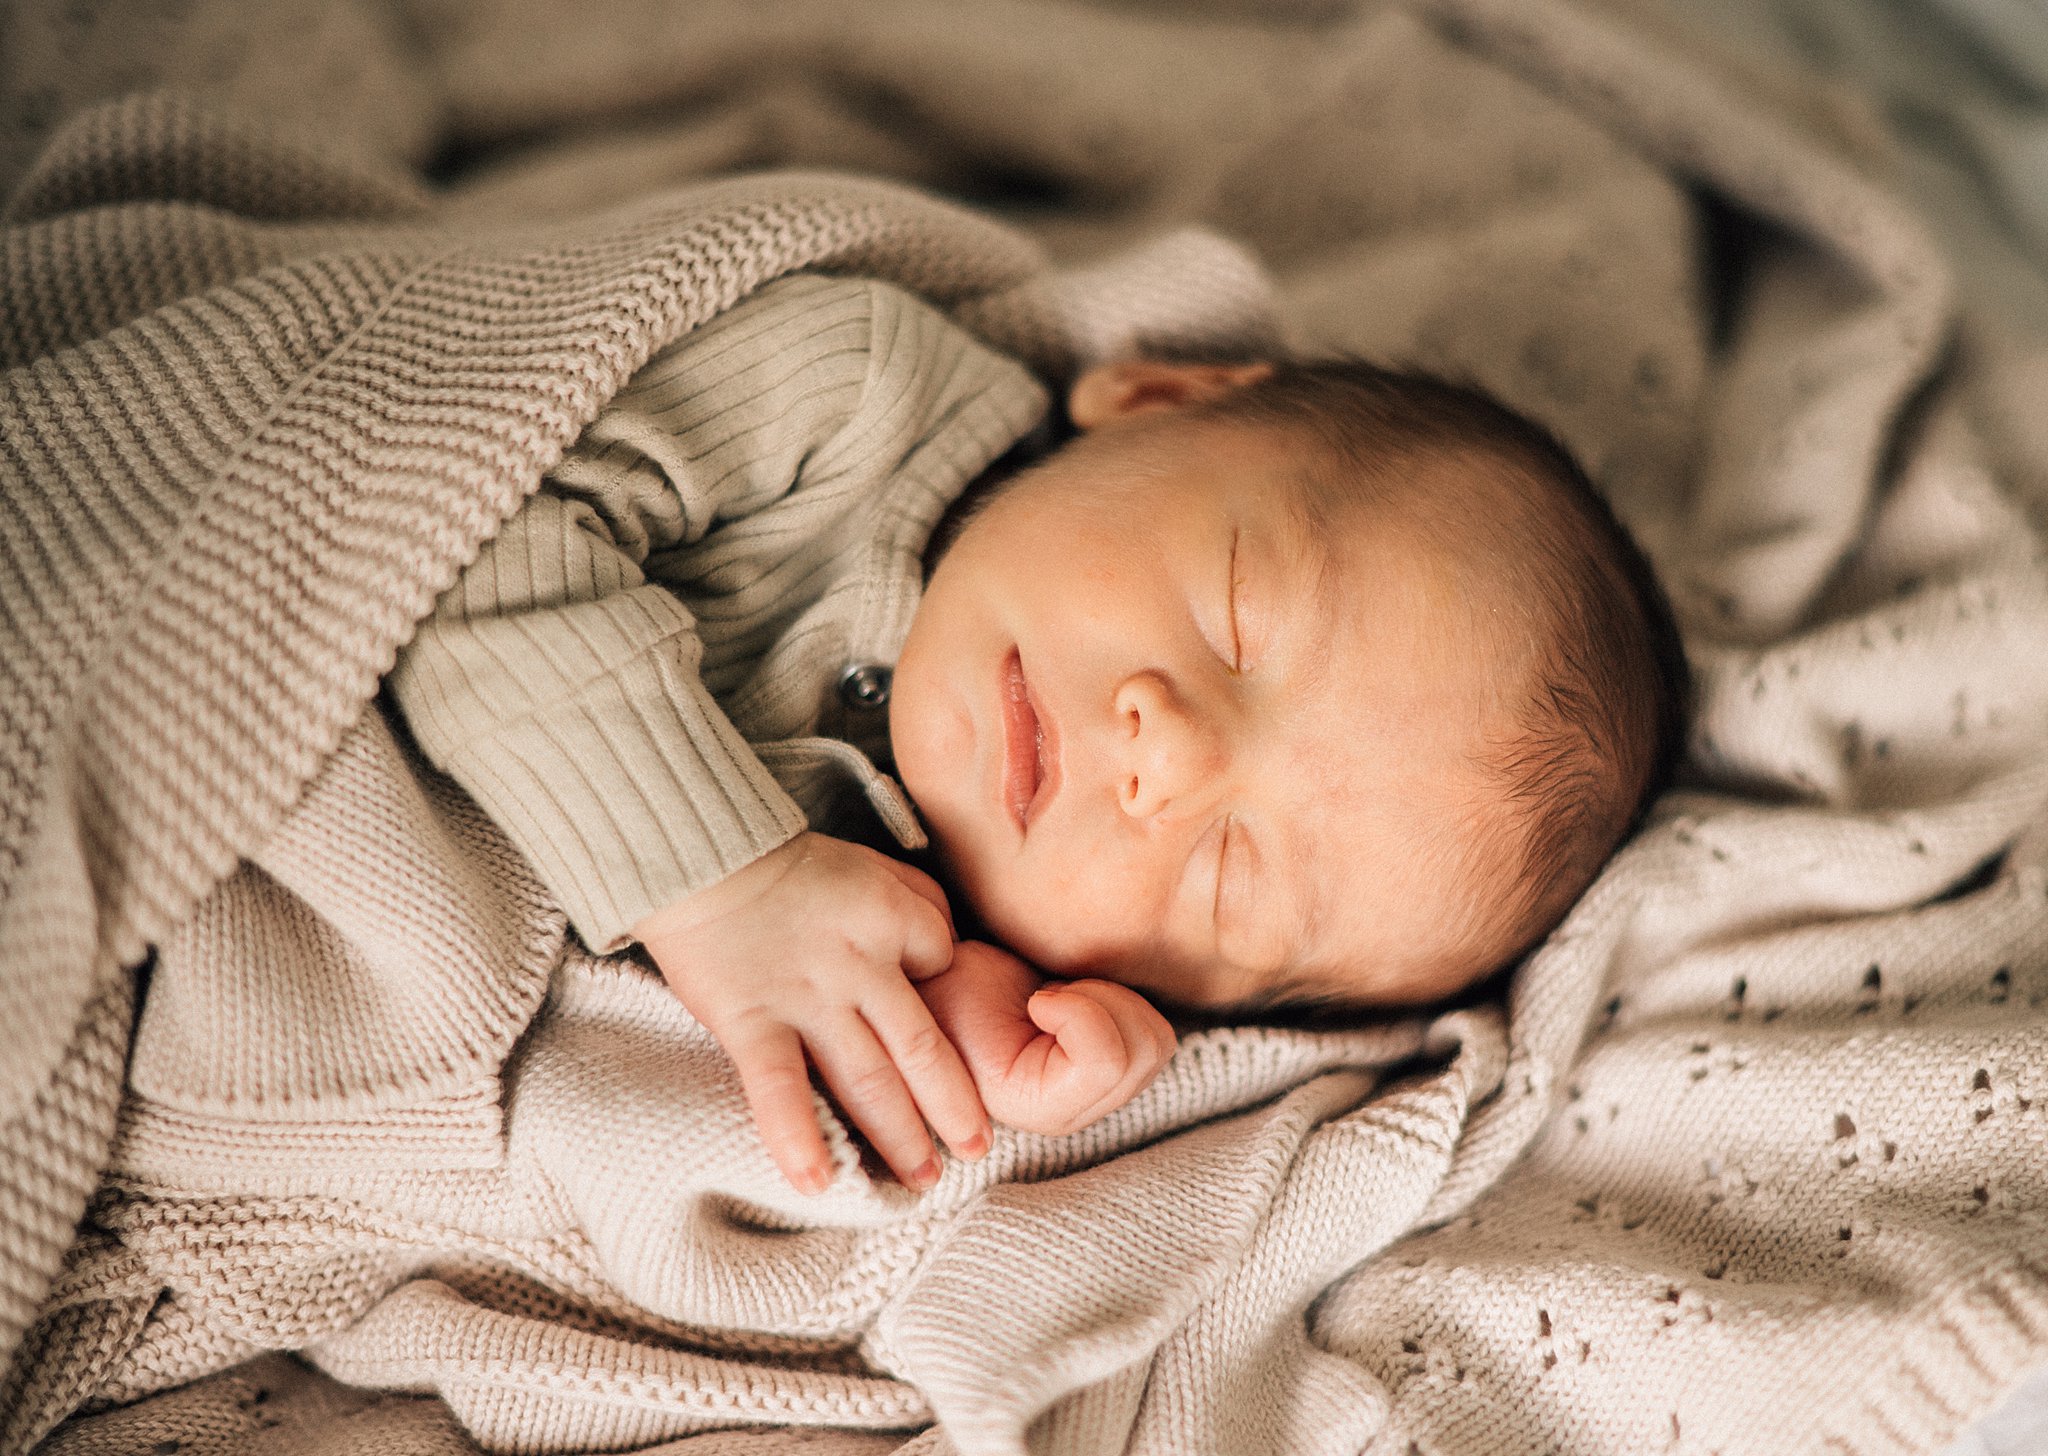 A newborn baby sleeps on its side in a tan onesie among matching knit blankets ottawa prenatal yoga